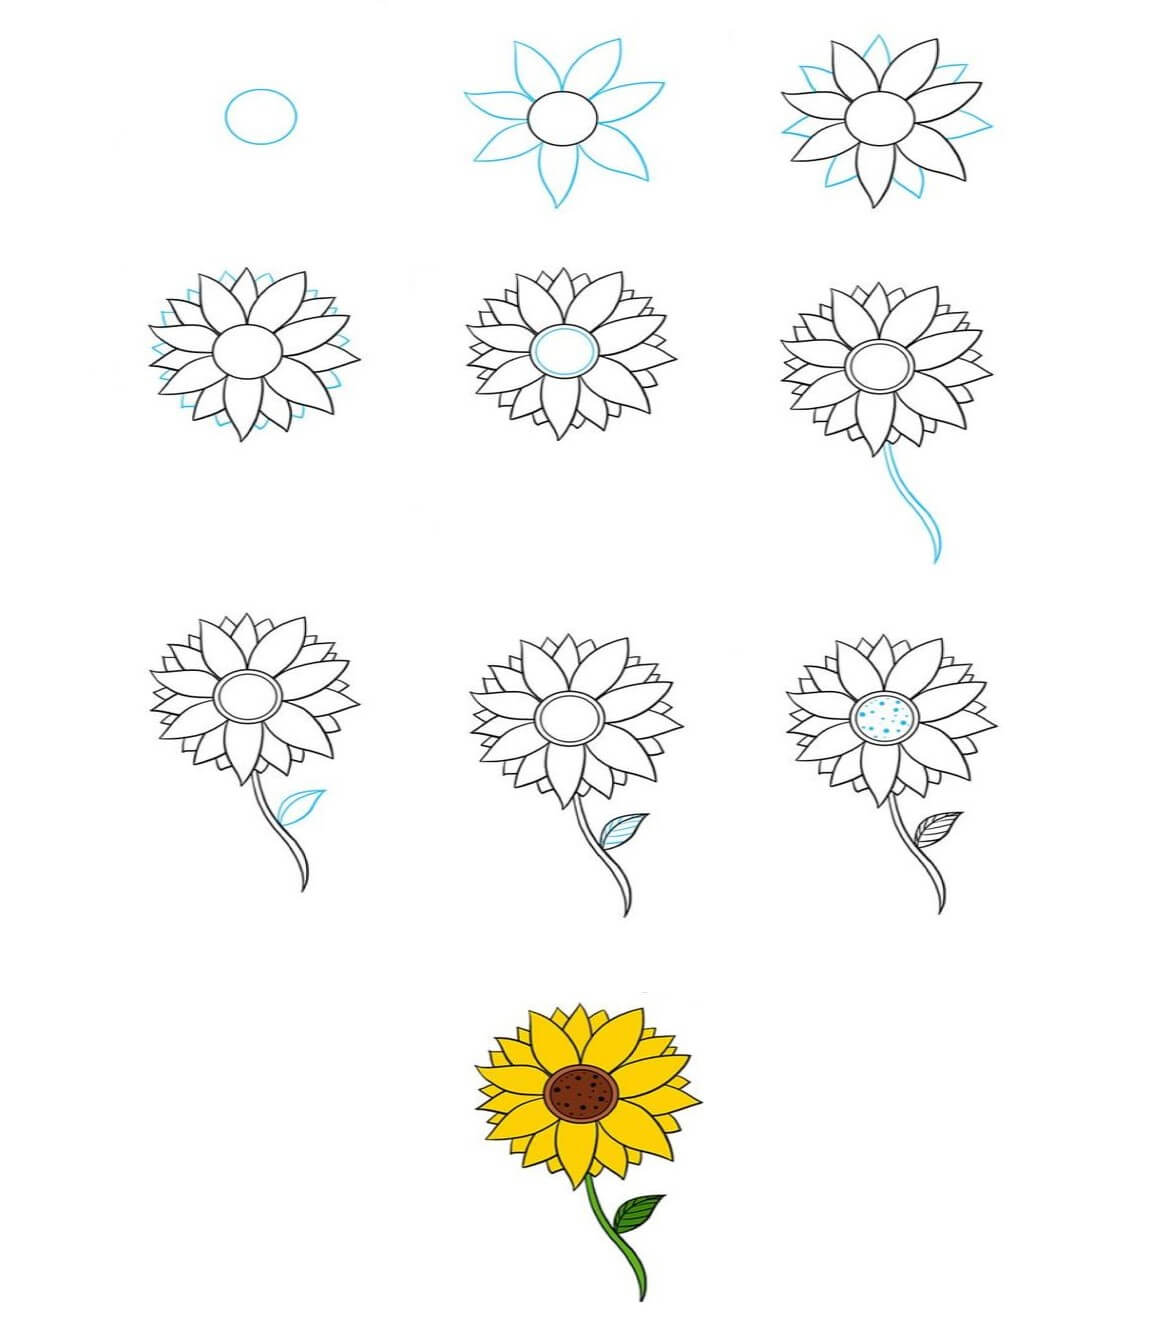 Auringonkukat idea (3) piirustus